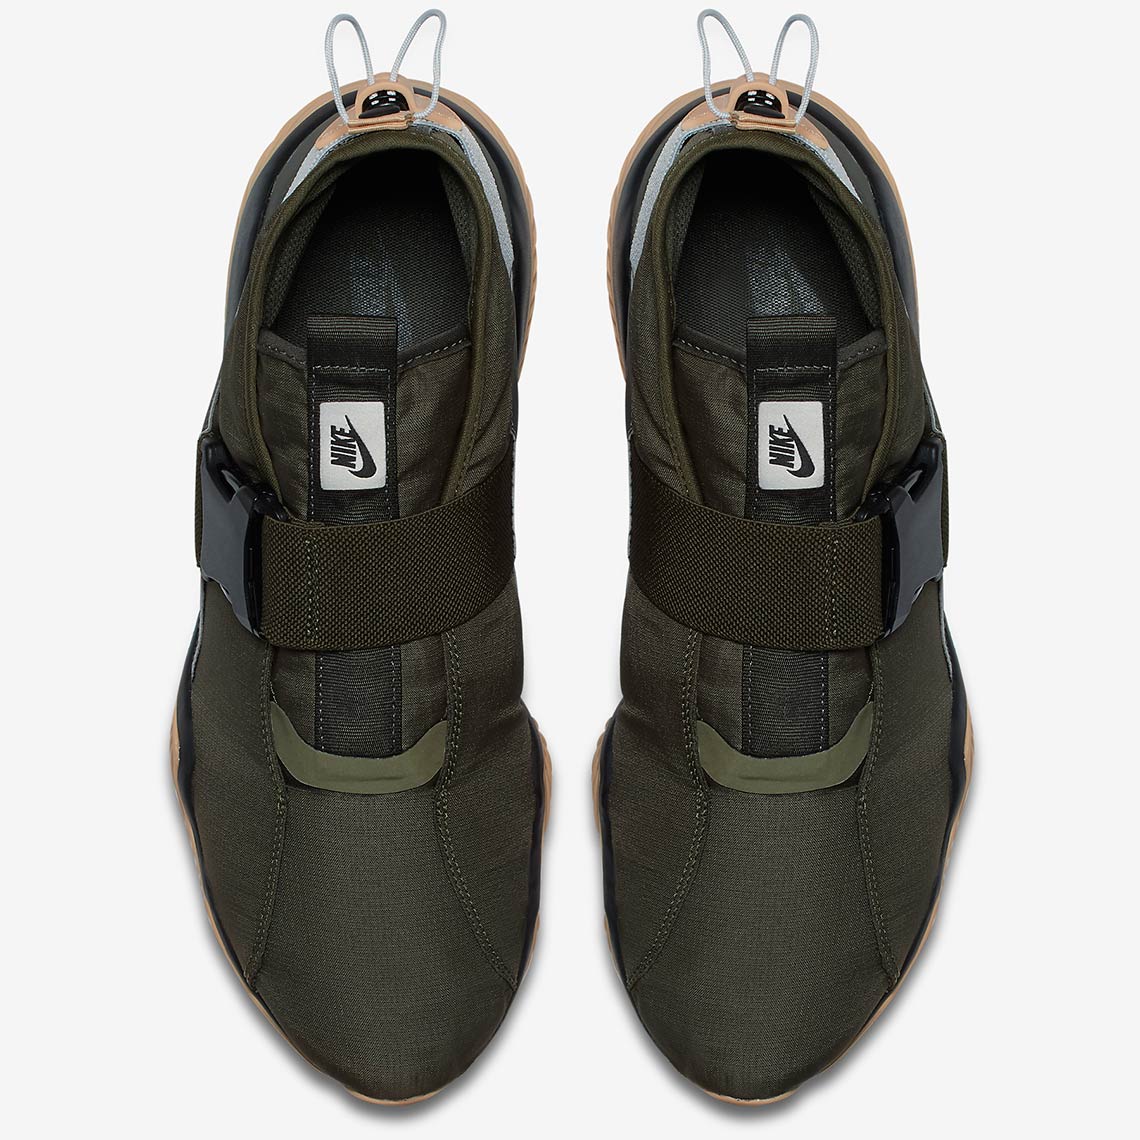 Nike Komyuter Cargo Khaki AQ8131-300 Available Now | SneakerNews.com